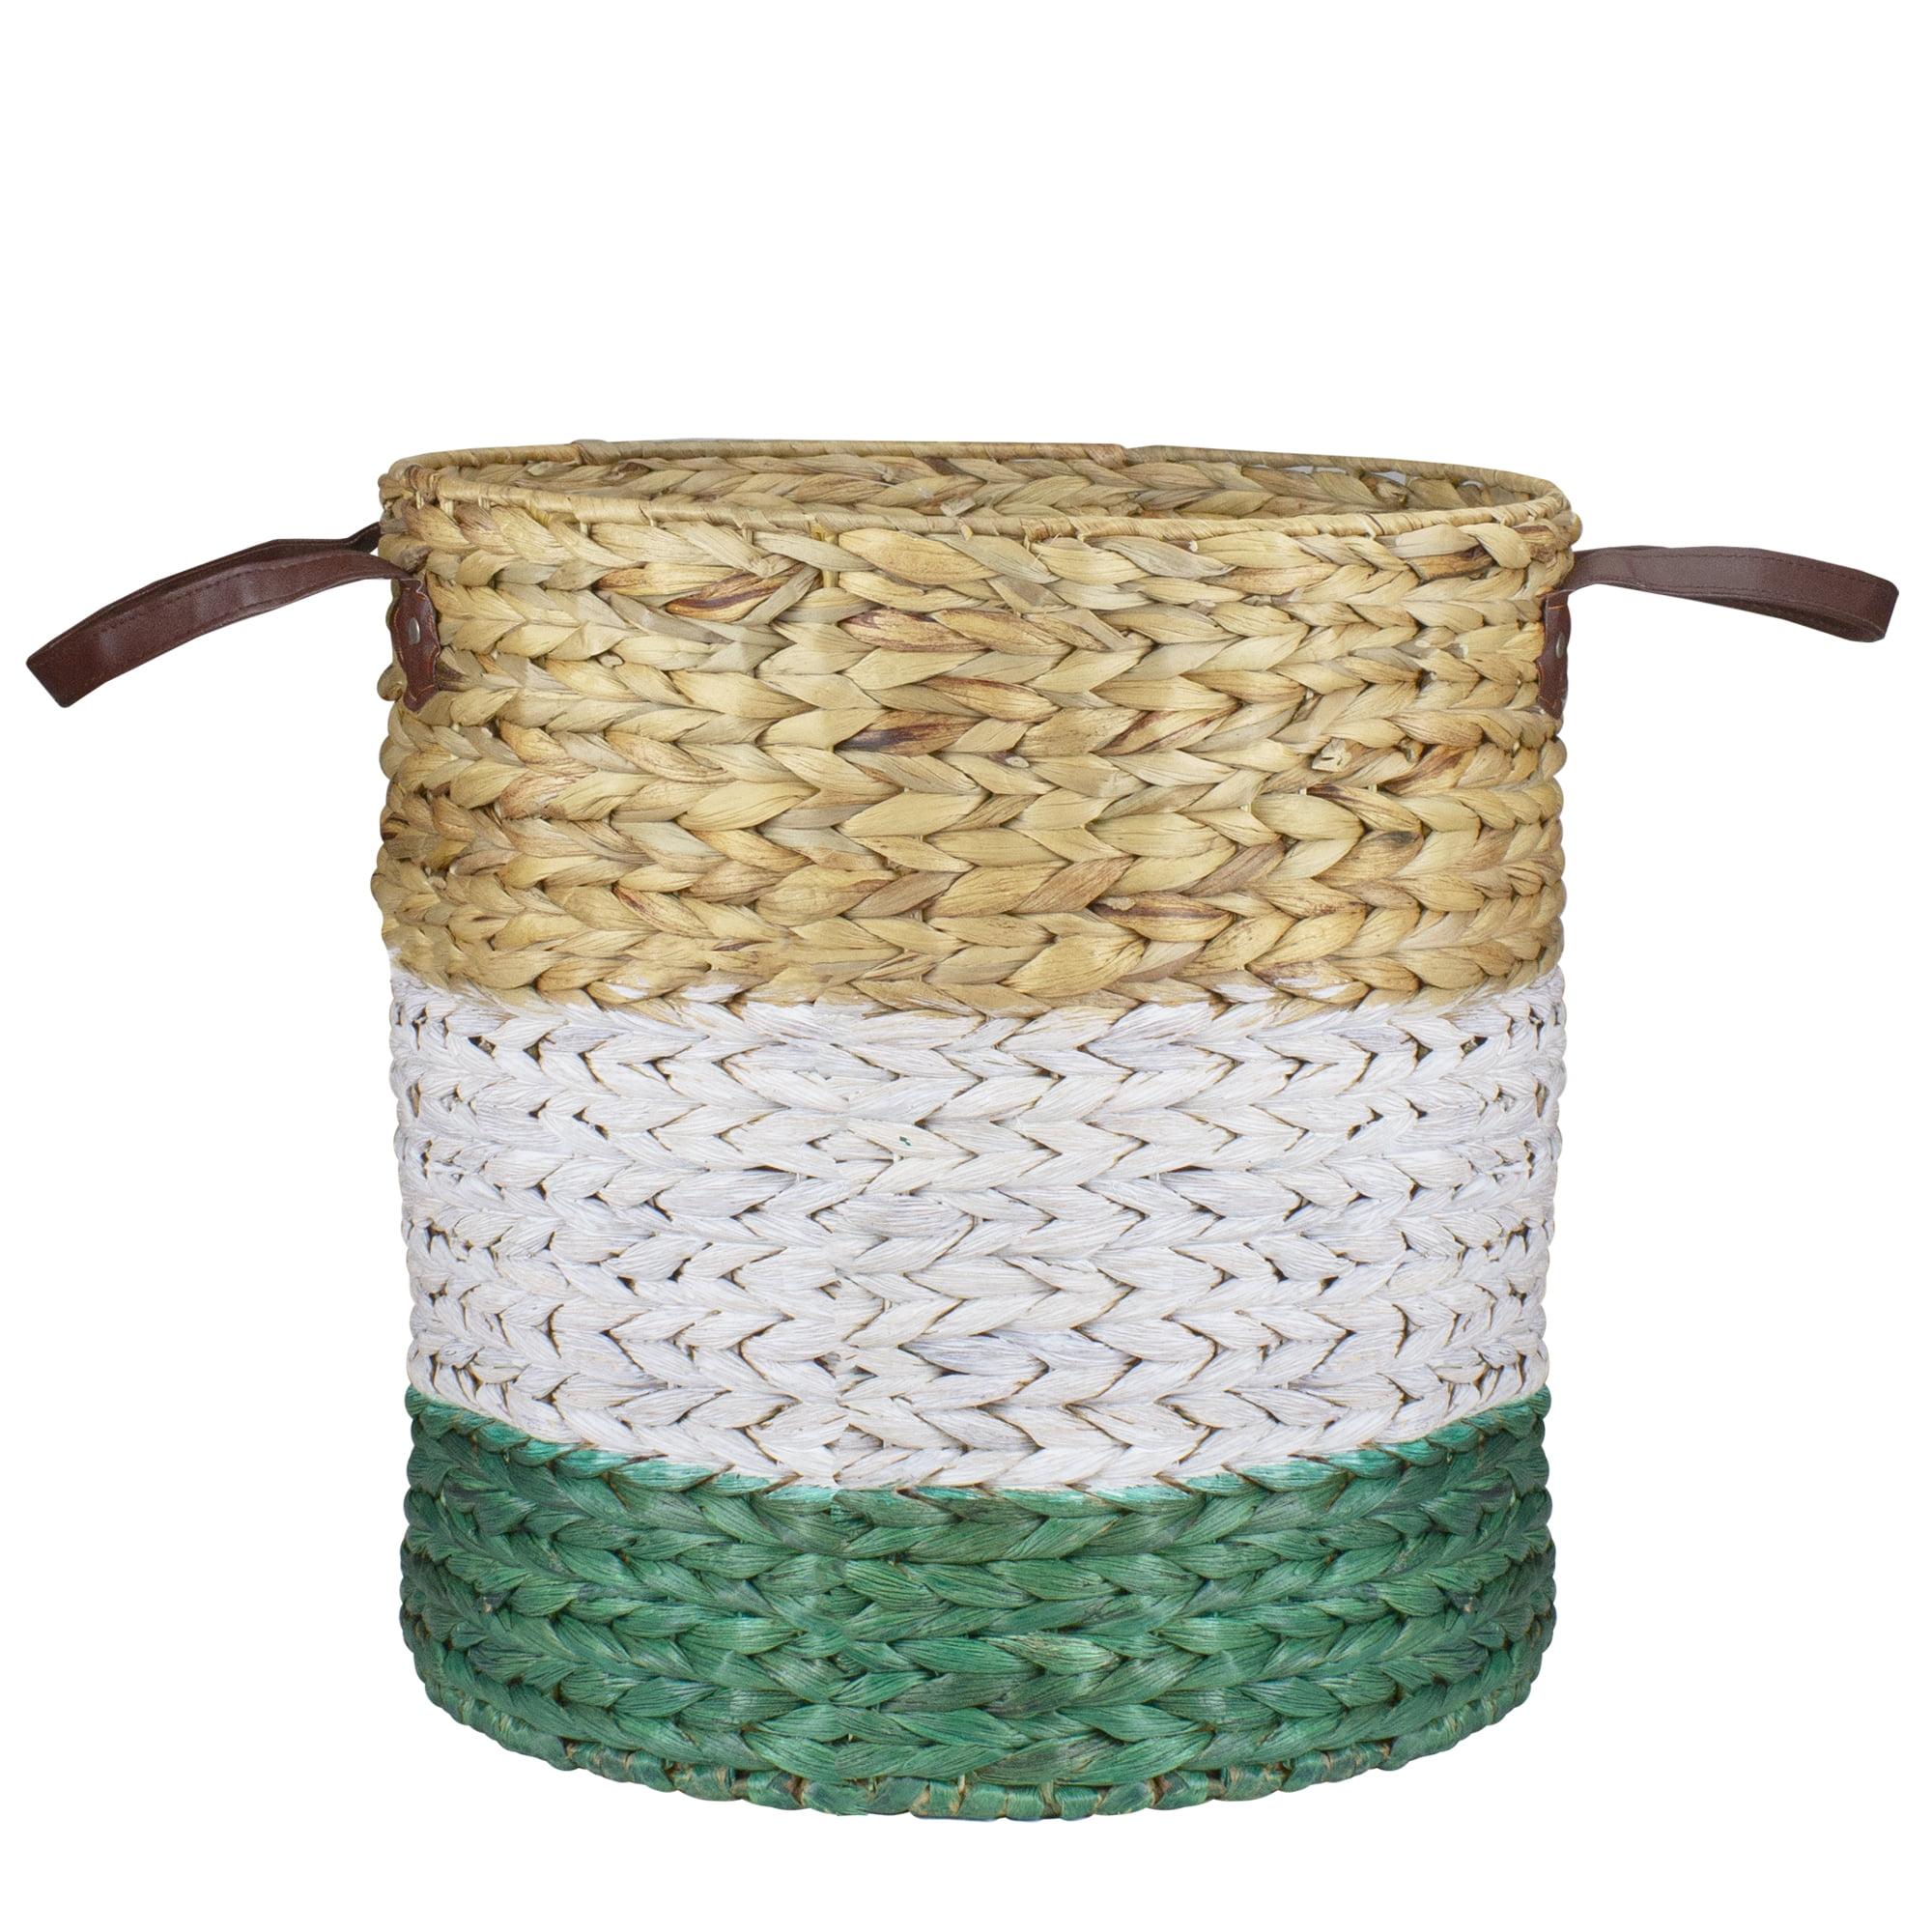 Rustic Seagrass 16" Round Storage Basket with Braided Design